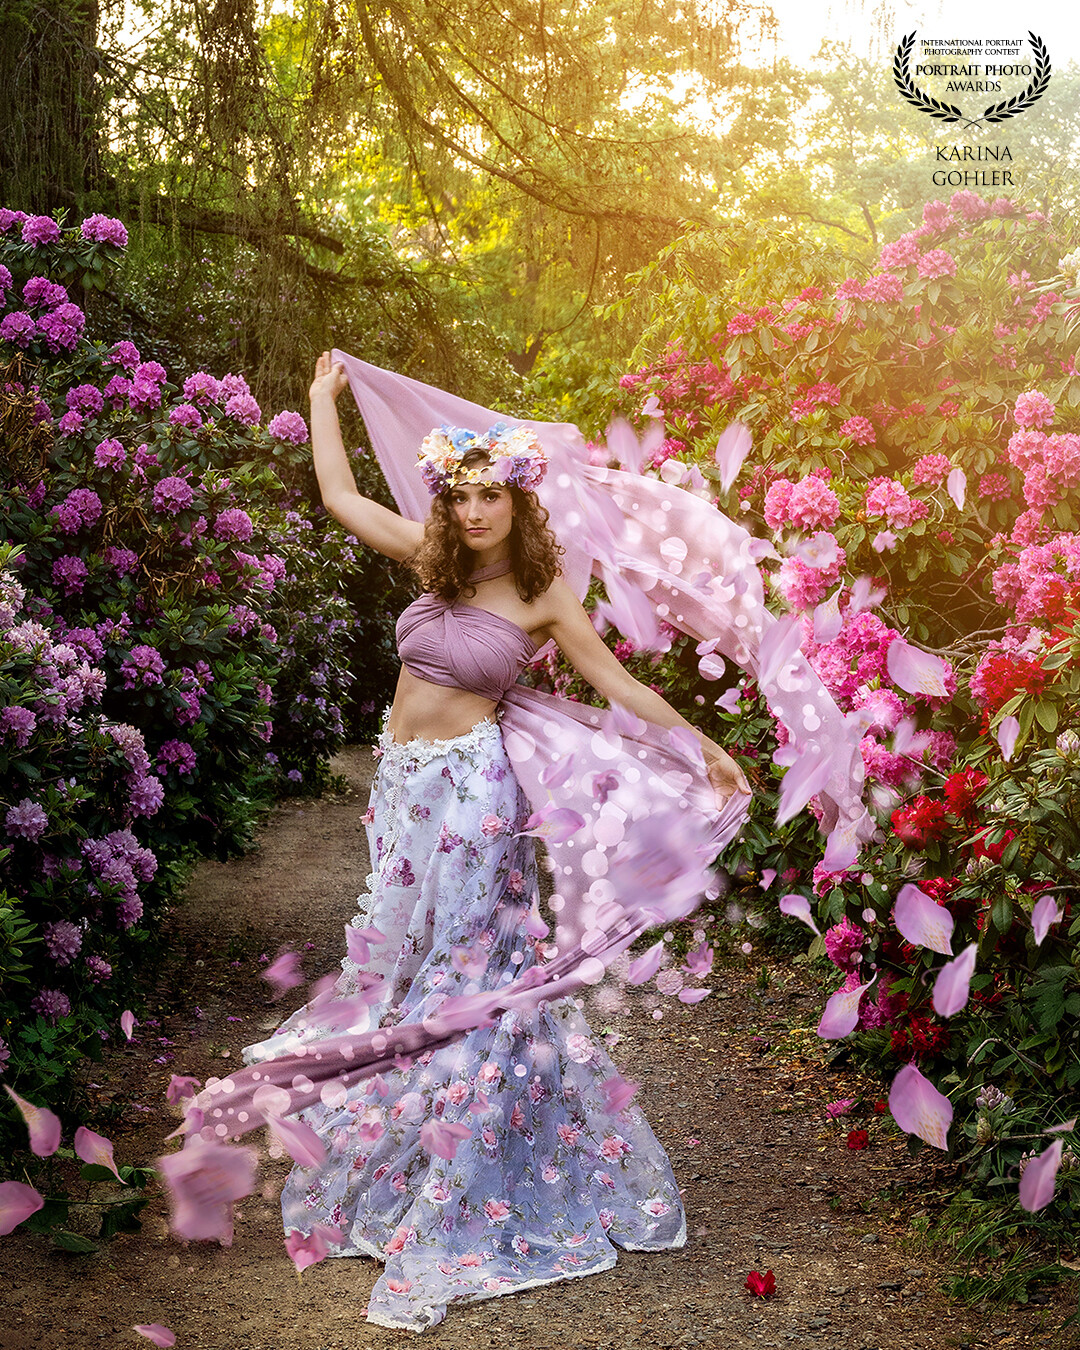 🌸 Blütentanz im Rhododendron-Paradies 🌸<br />
<br />
Model: Anne<br />
Fotoidee: TraumFunkenBande<br />
Bearbeitung: Karina Göhler Medien